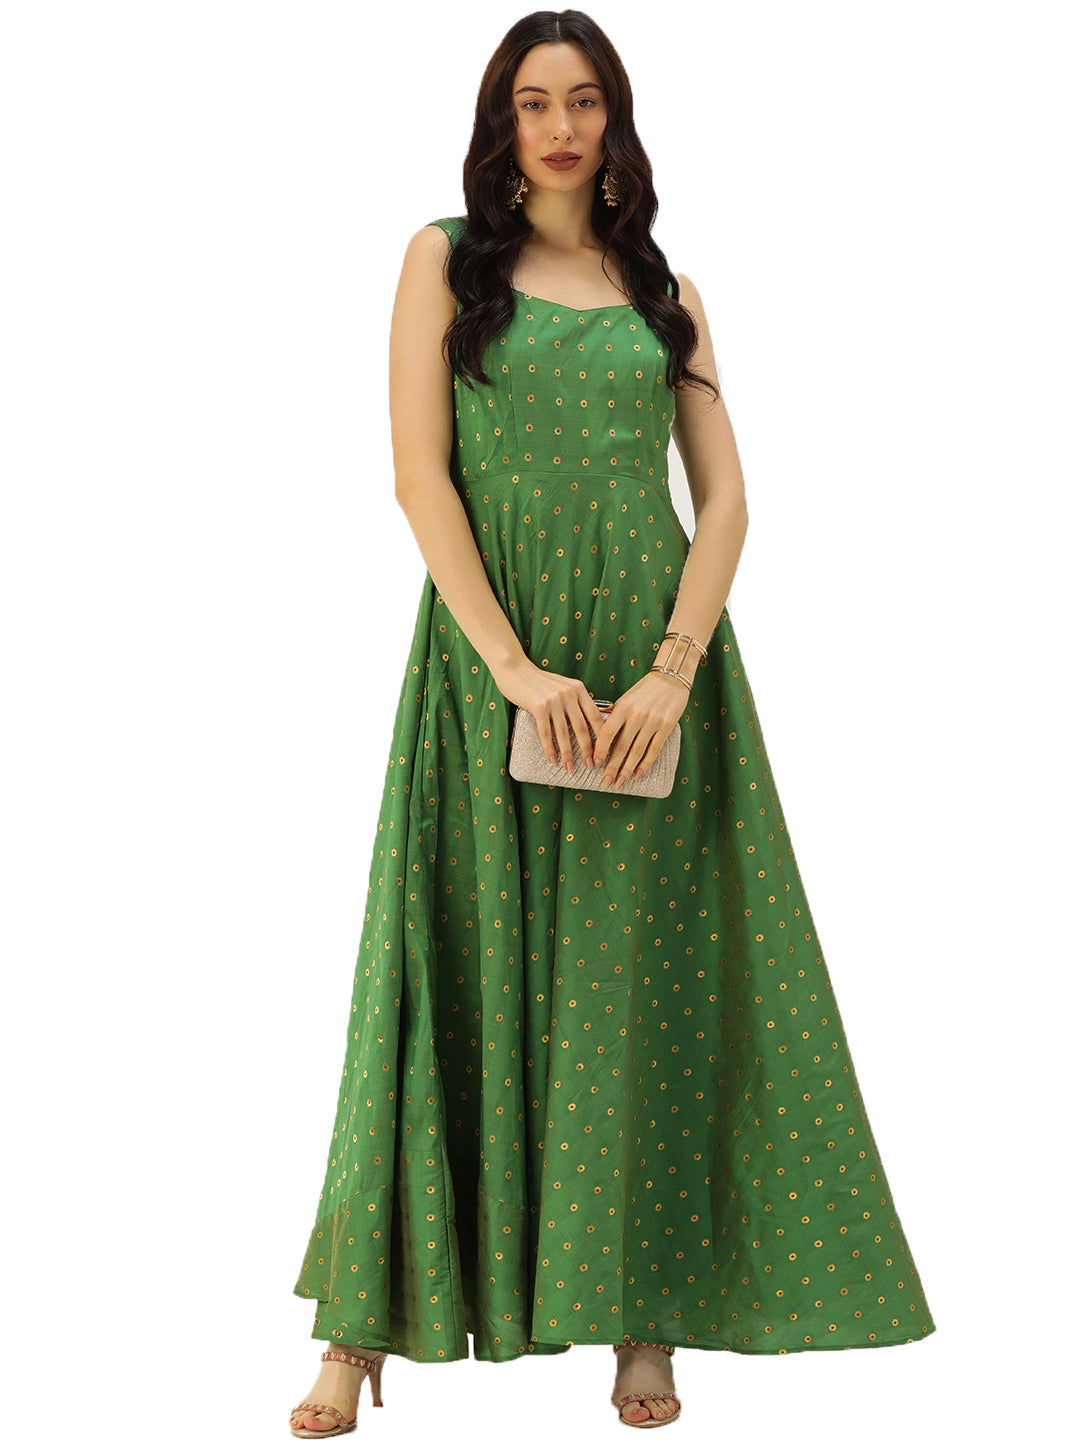 Green-Taffeta-Gown